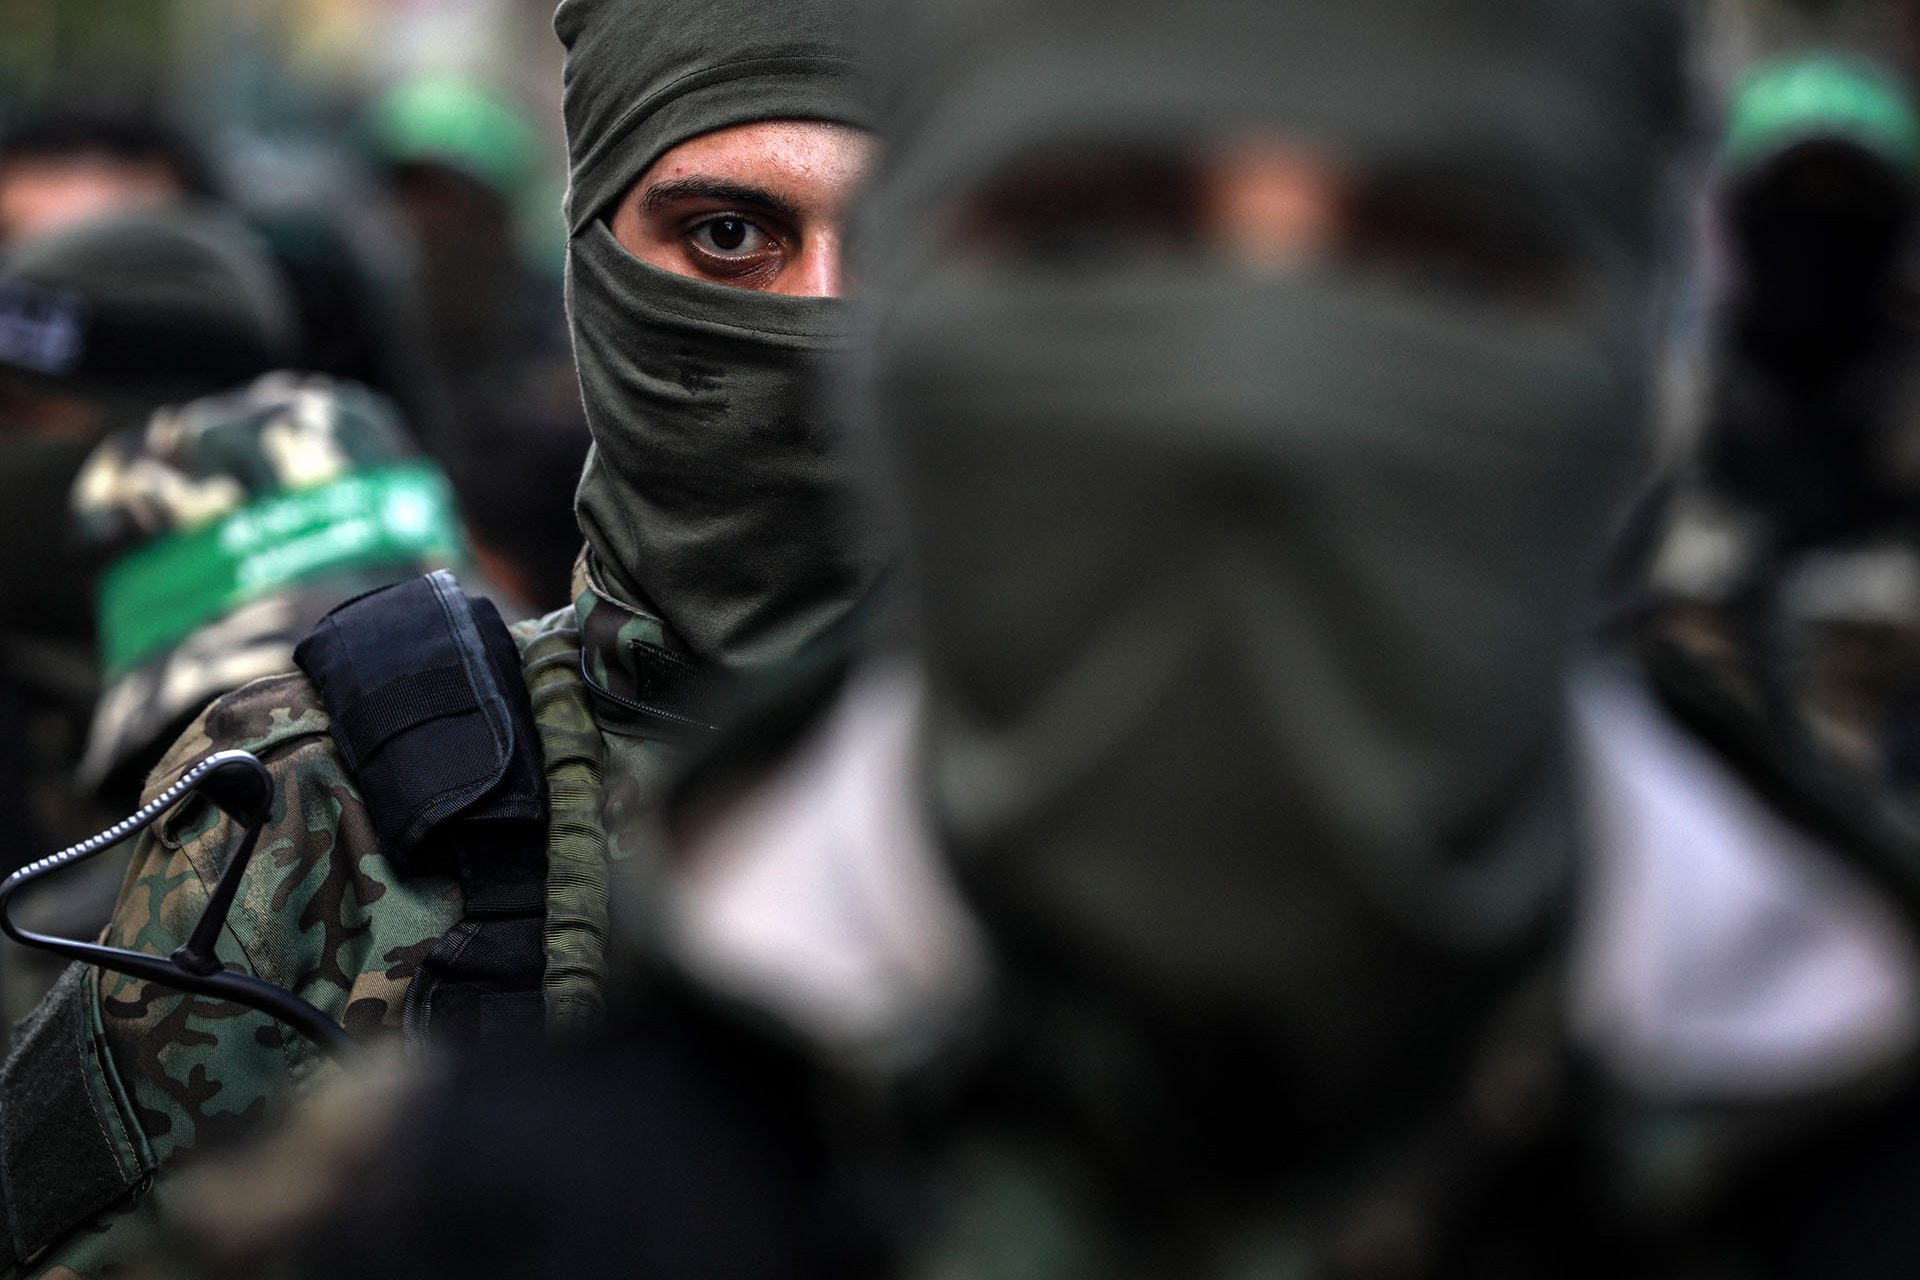 Calls Hamas members 'animals'